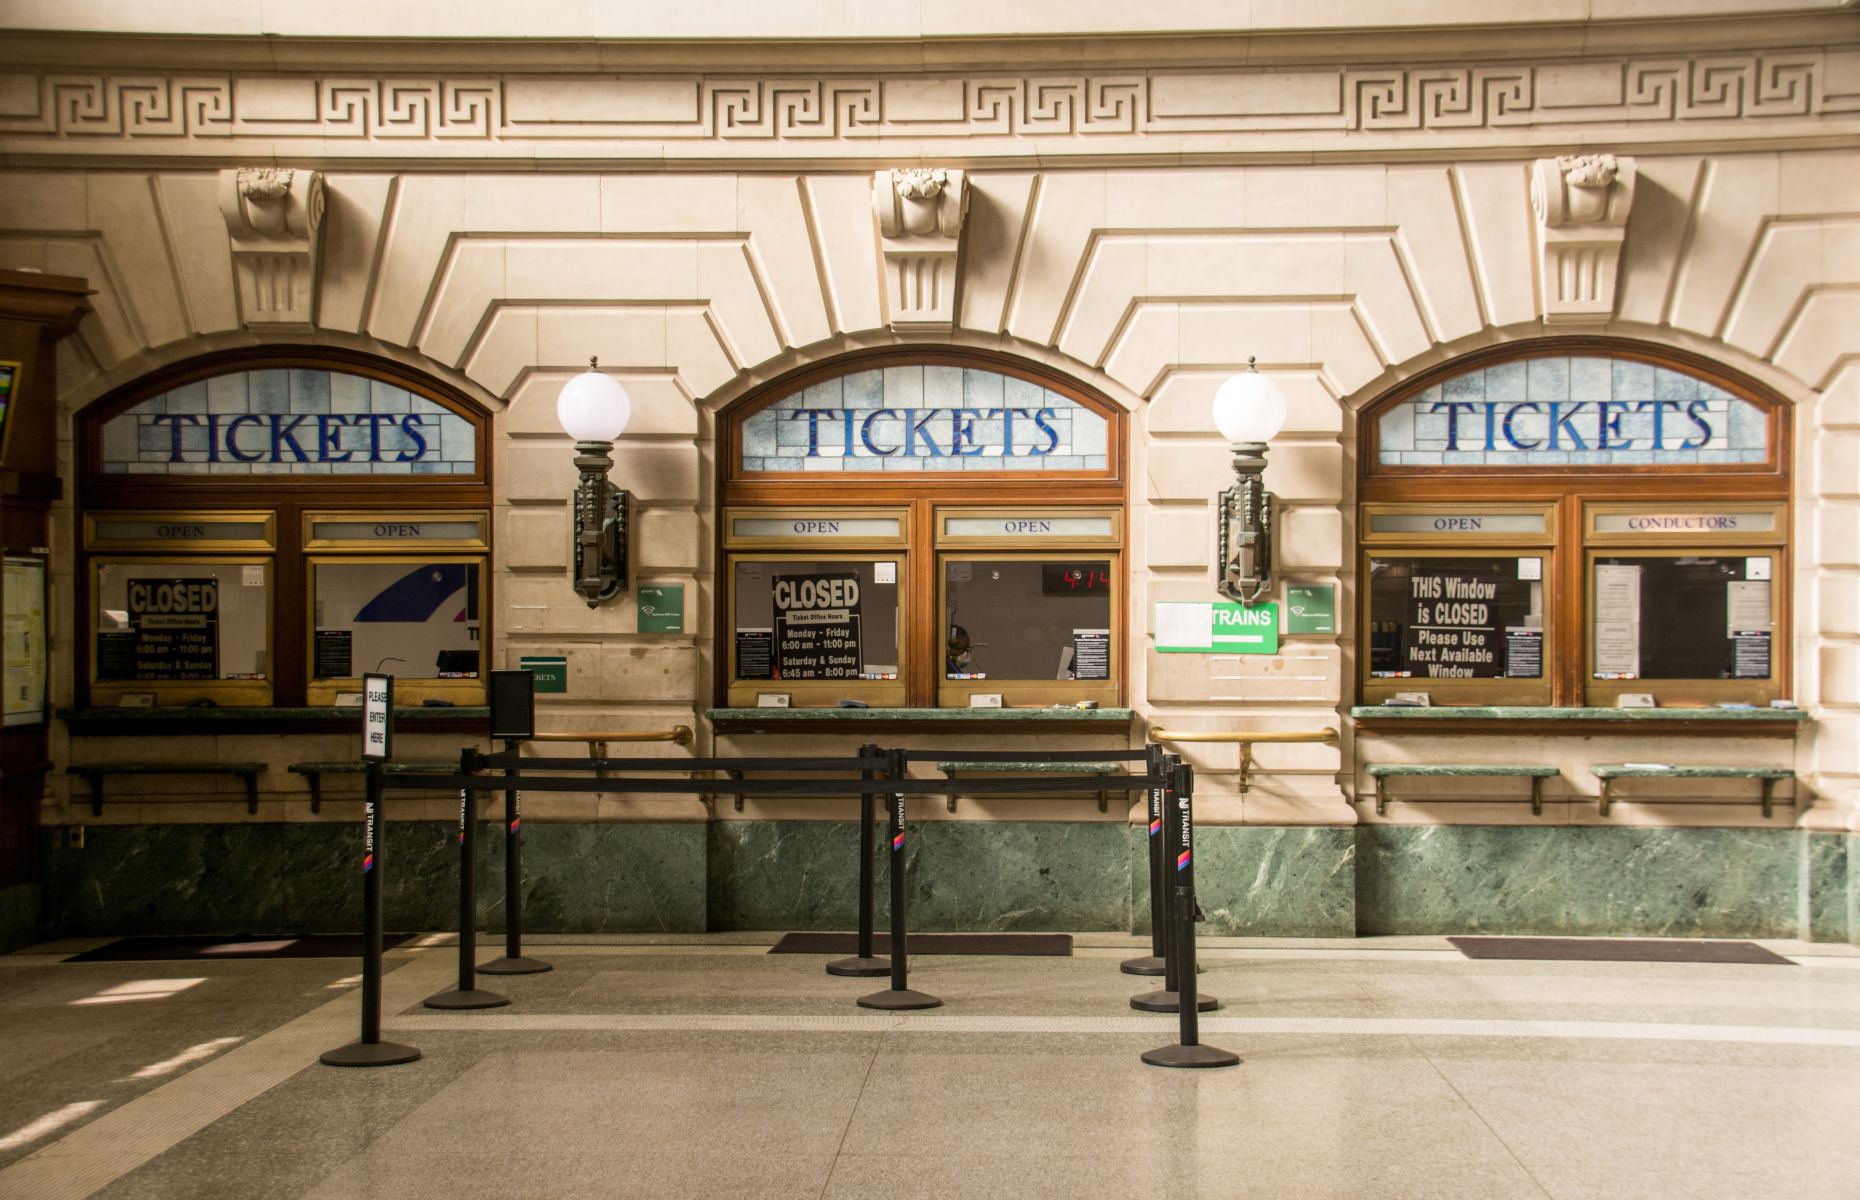 Lackawana train station ticketing area (Image: Robi Jaffrey/Shutterstock)